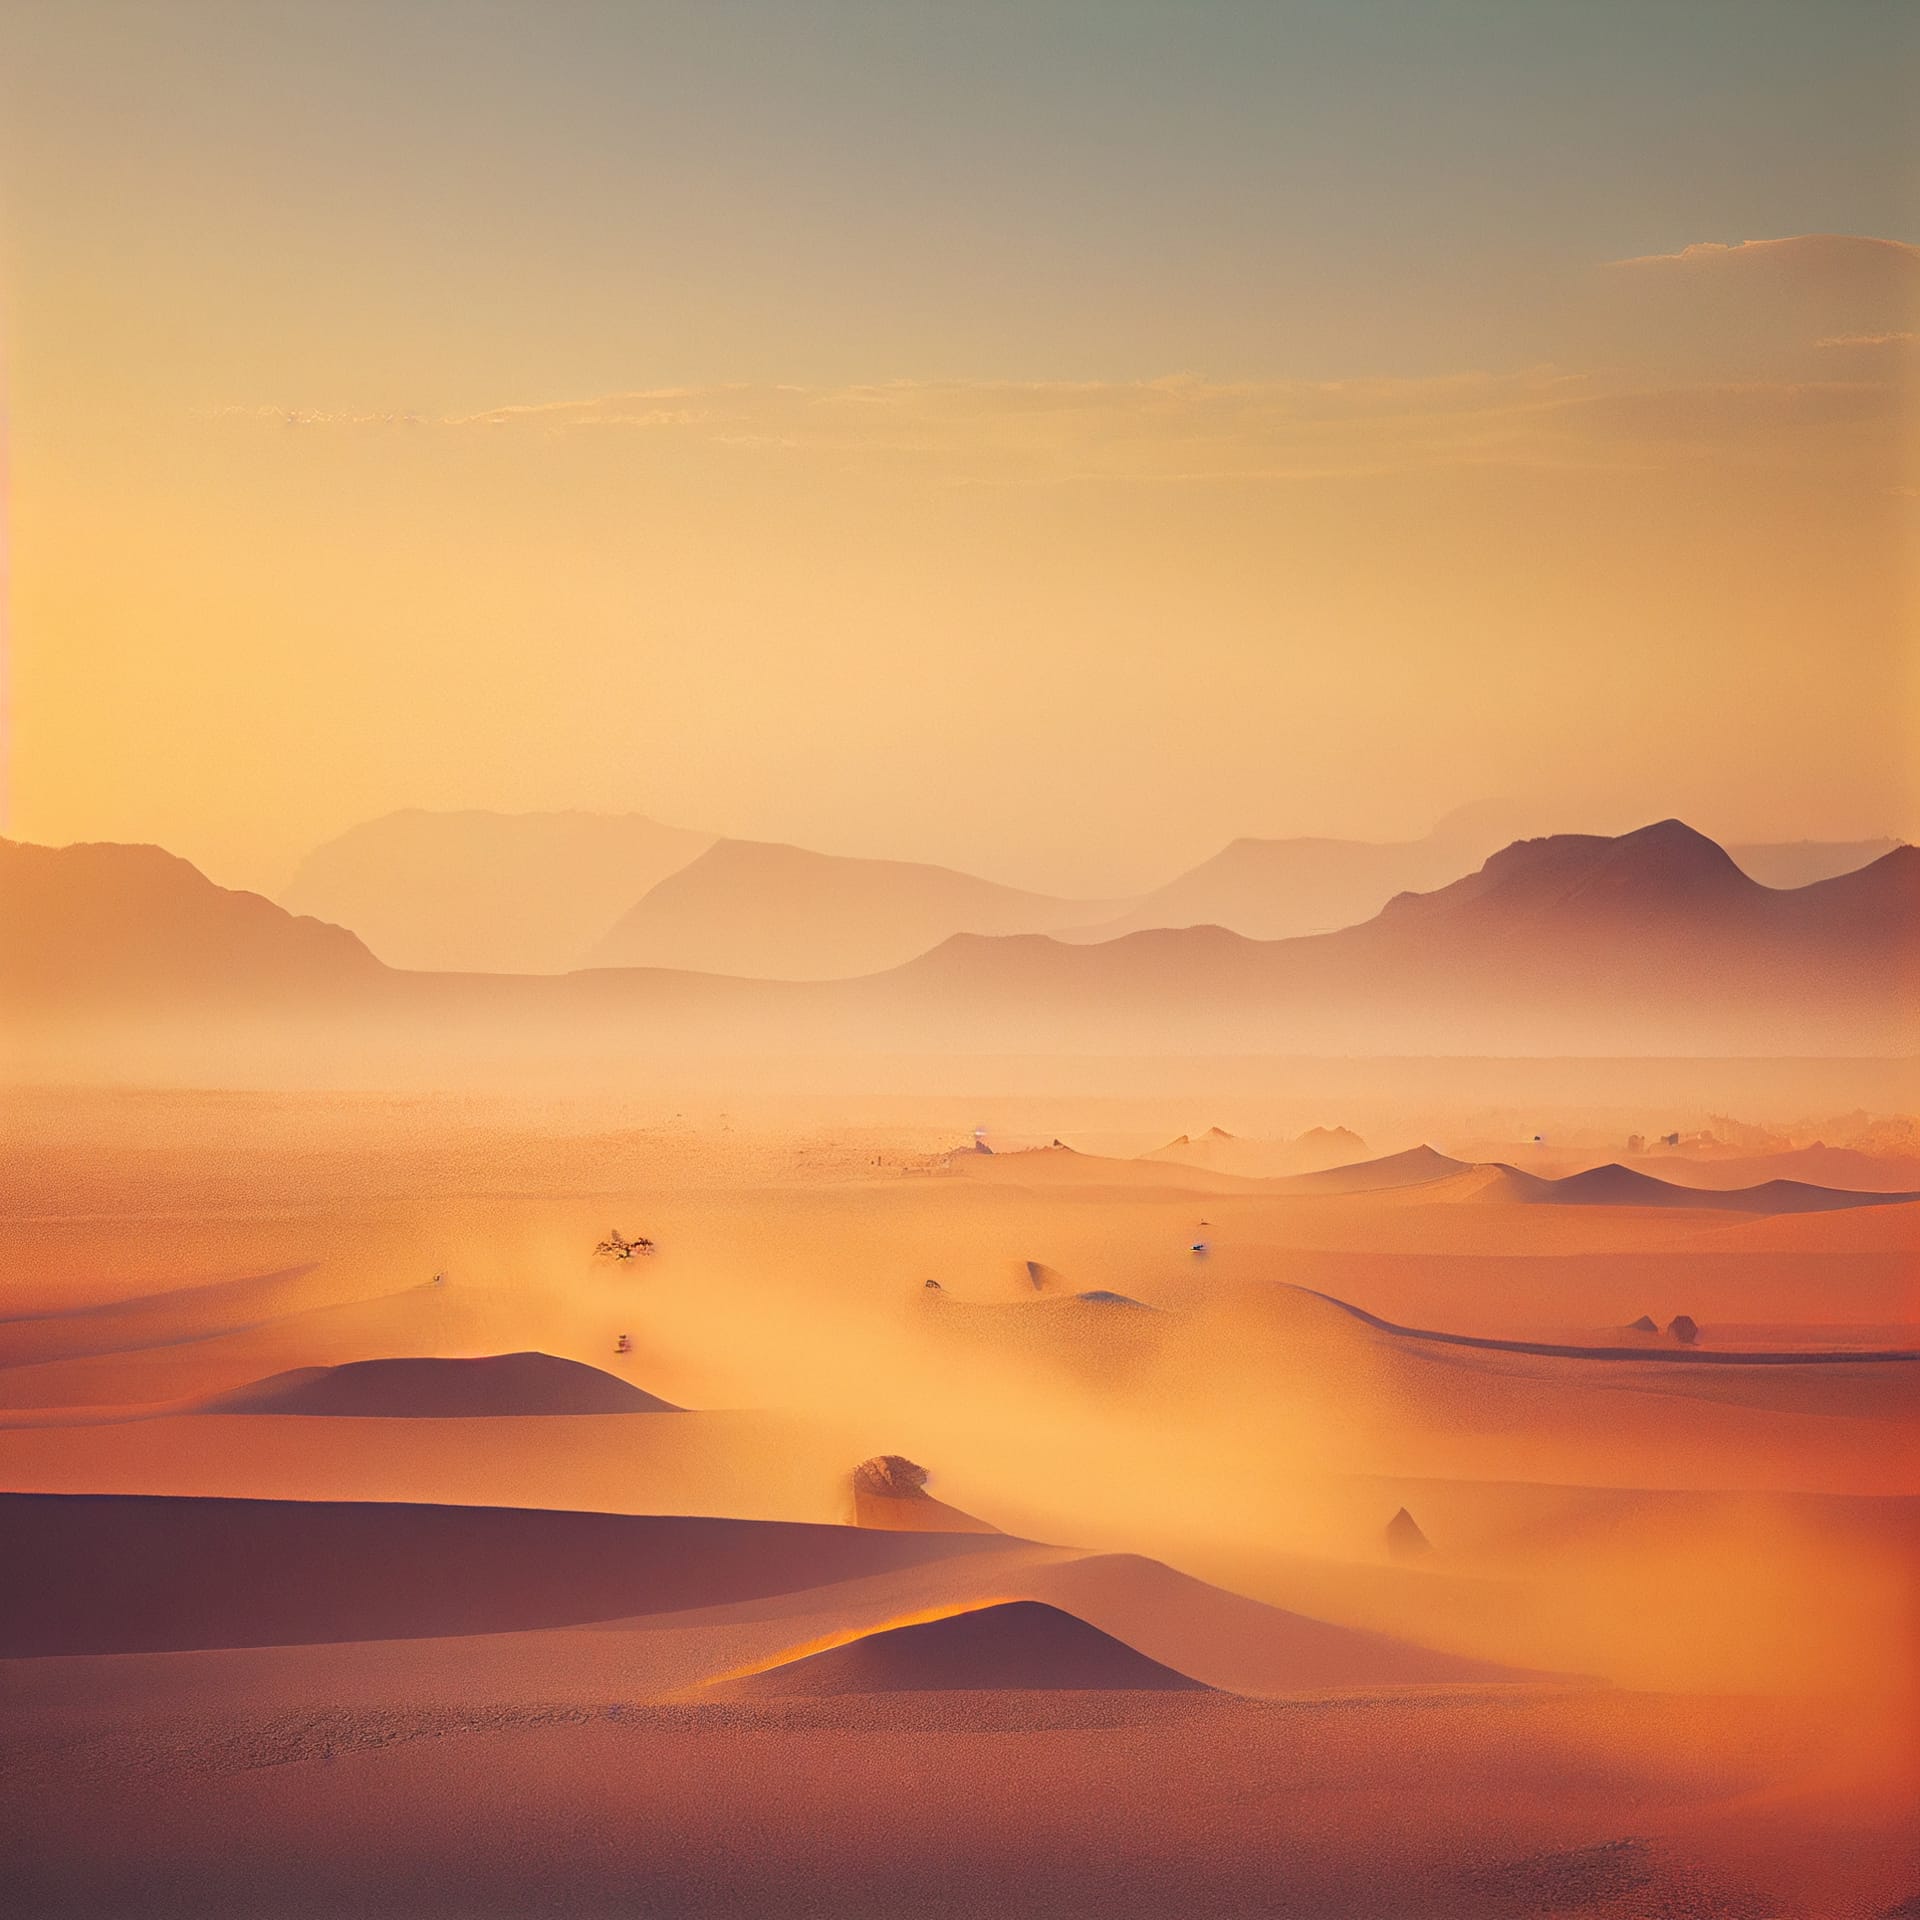 Beautiful desert landscape sunset sunrise picture nature clipart